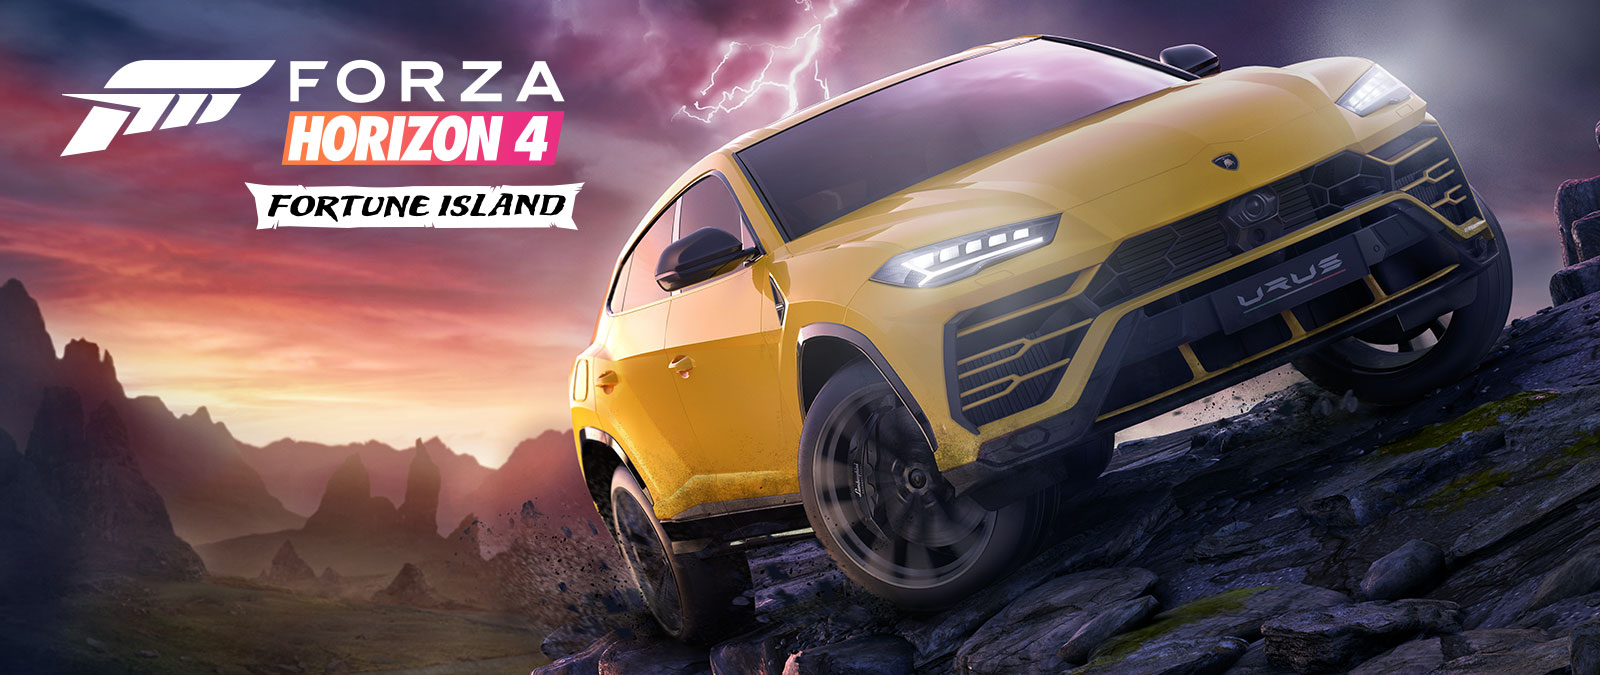 achterstalligheid Normaal beklimmen Forza Horizon 4 | Xbox